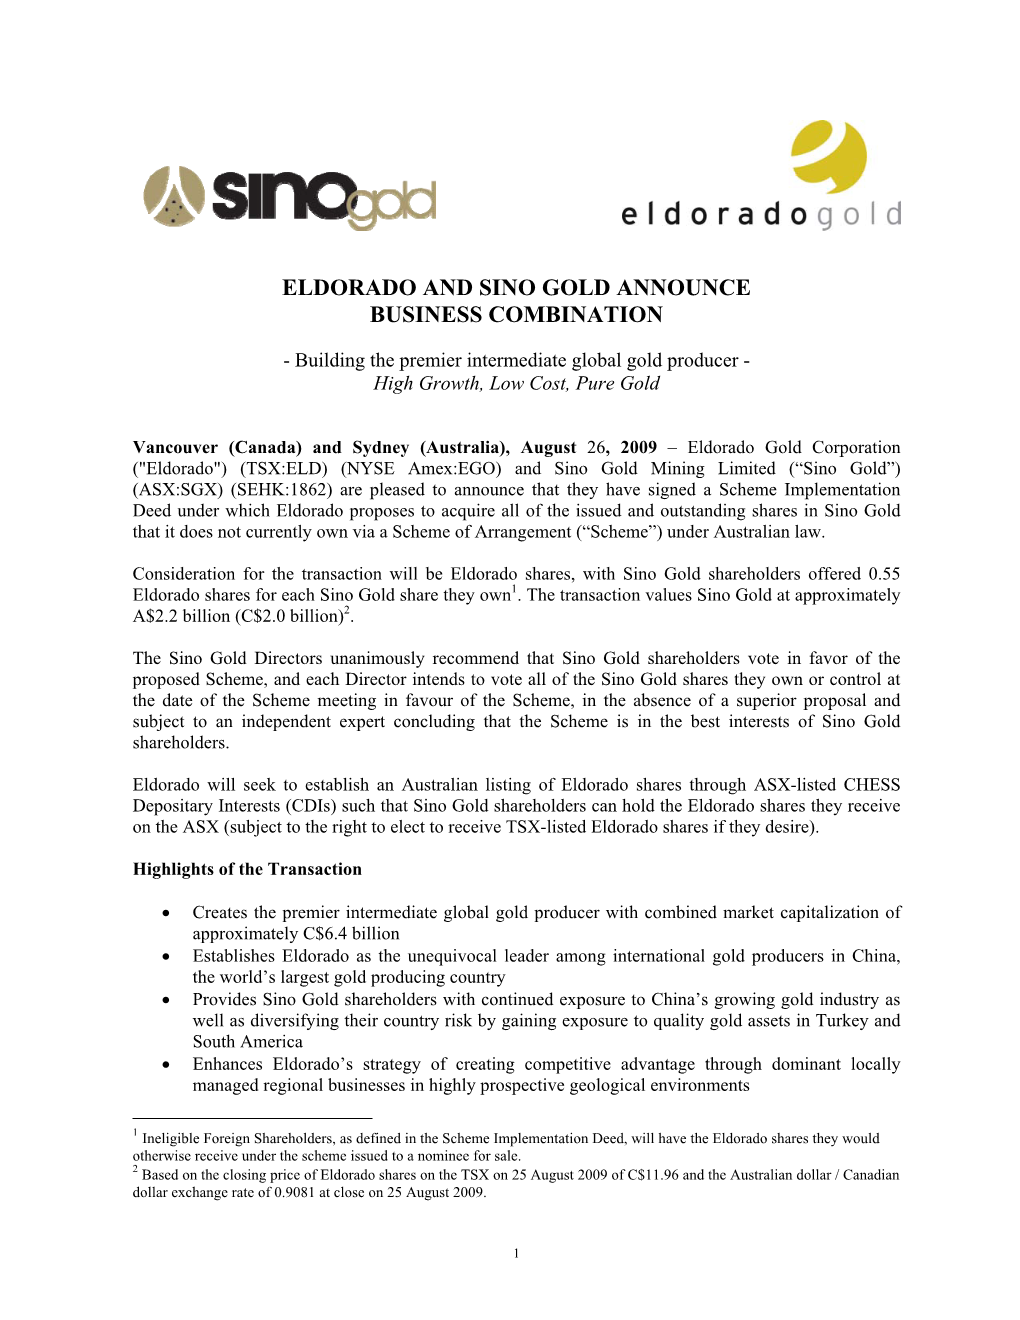 Eldorado and Sino Gold Announce Business Combination